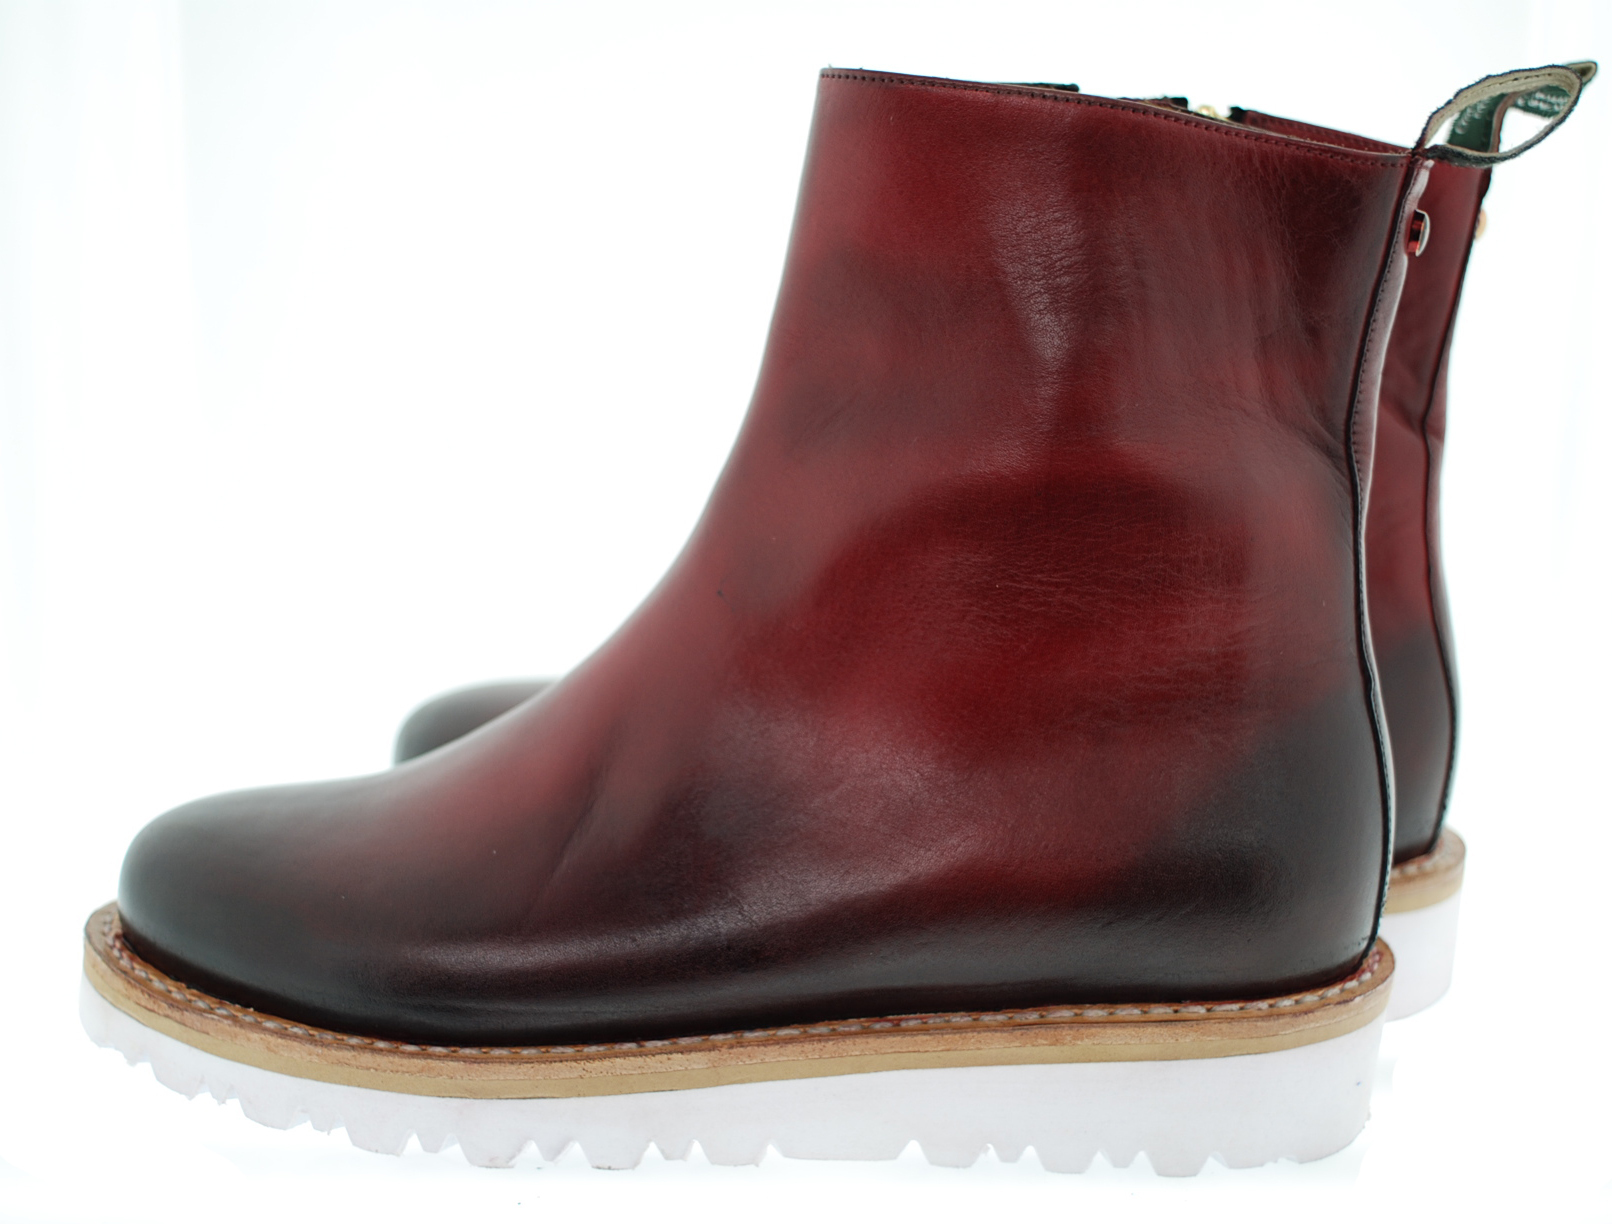 New Handmade Moc Toe Zipped Boots (Camden Town ) ID 7150